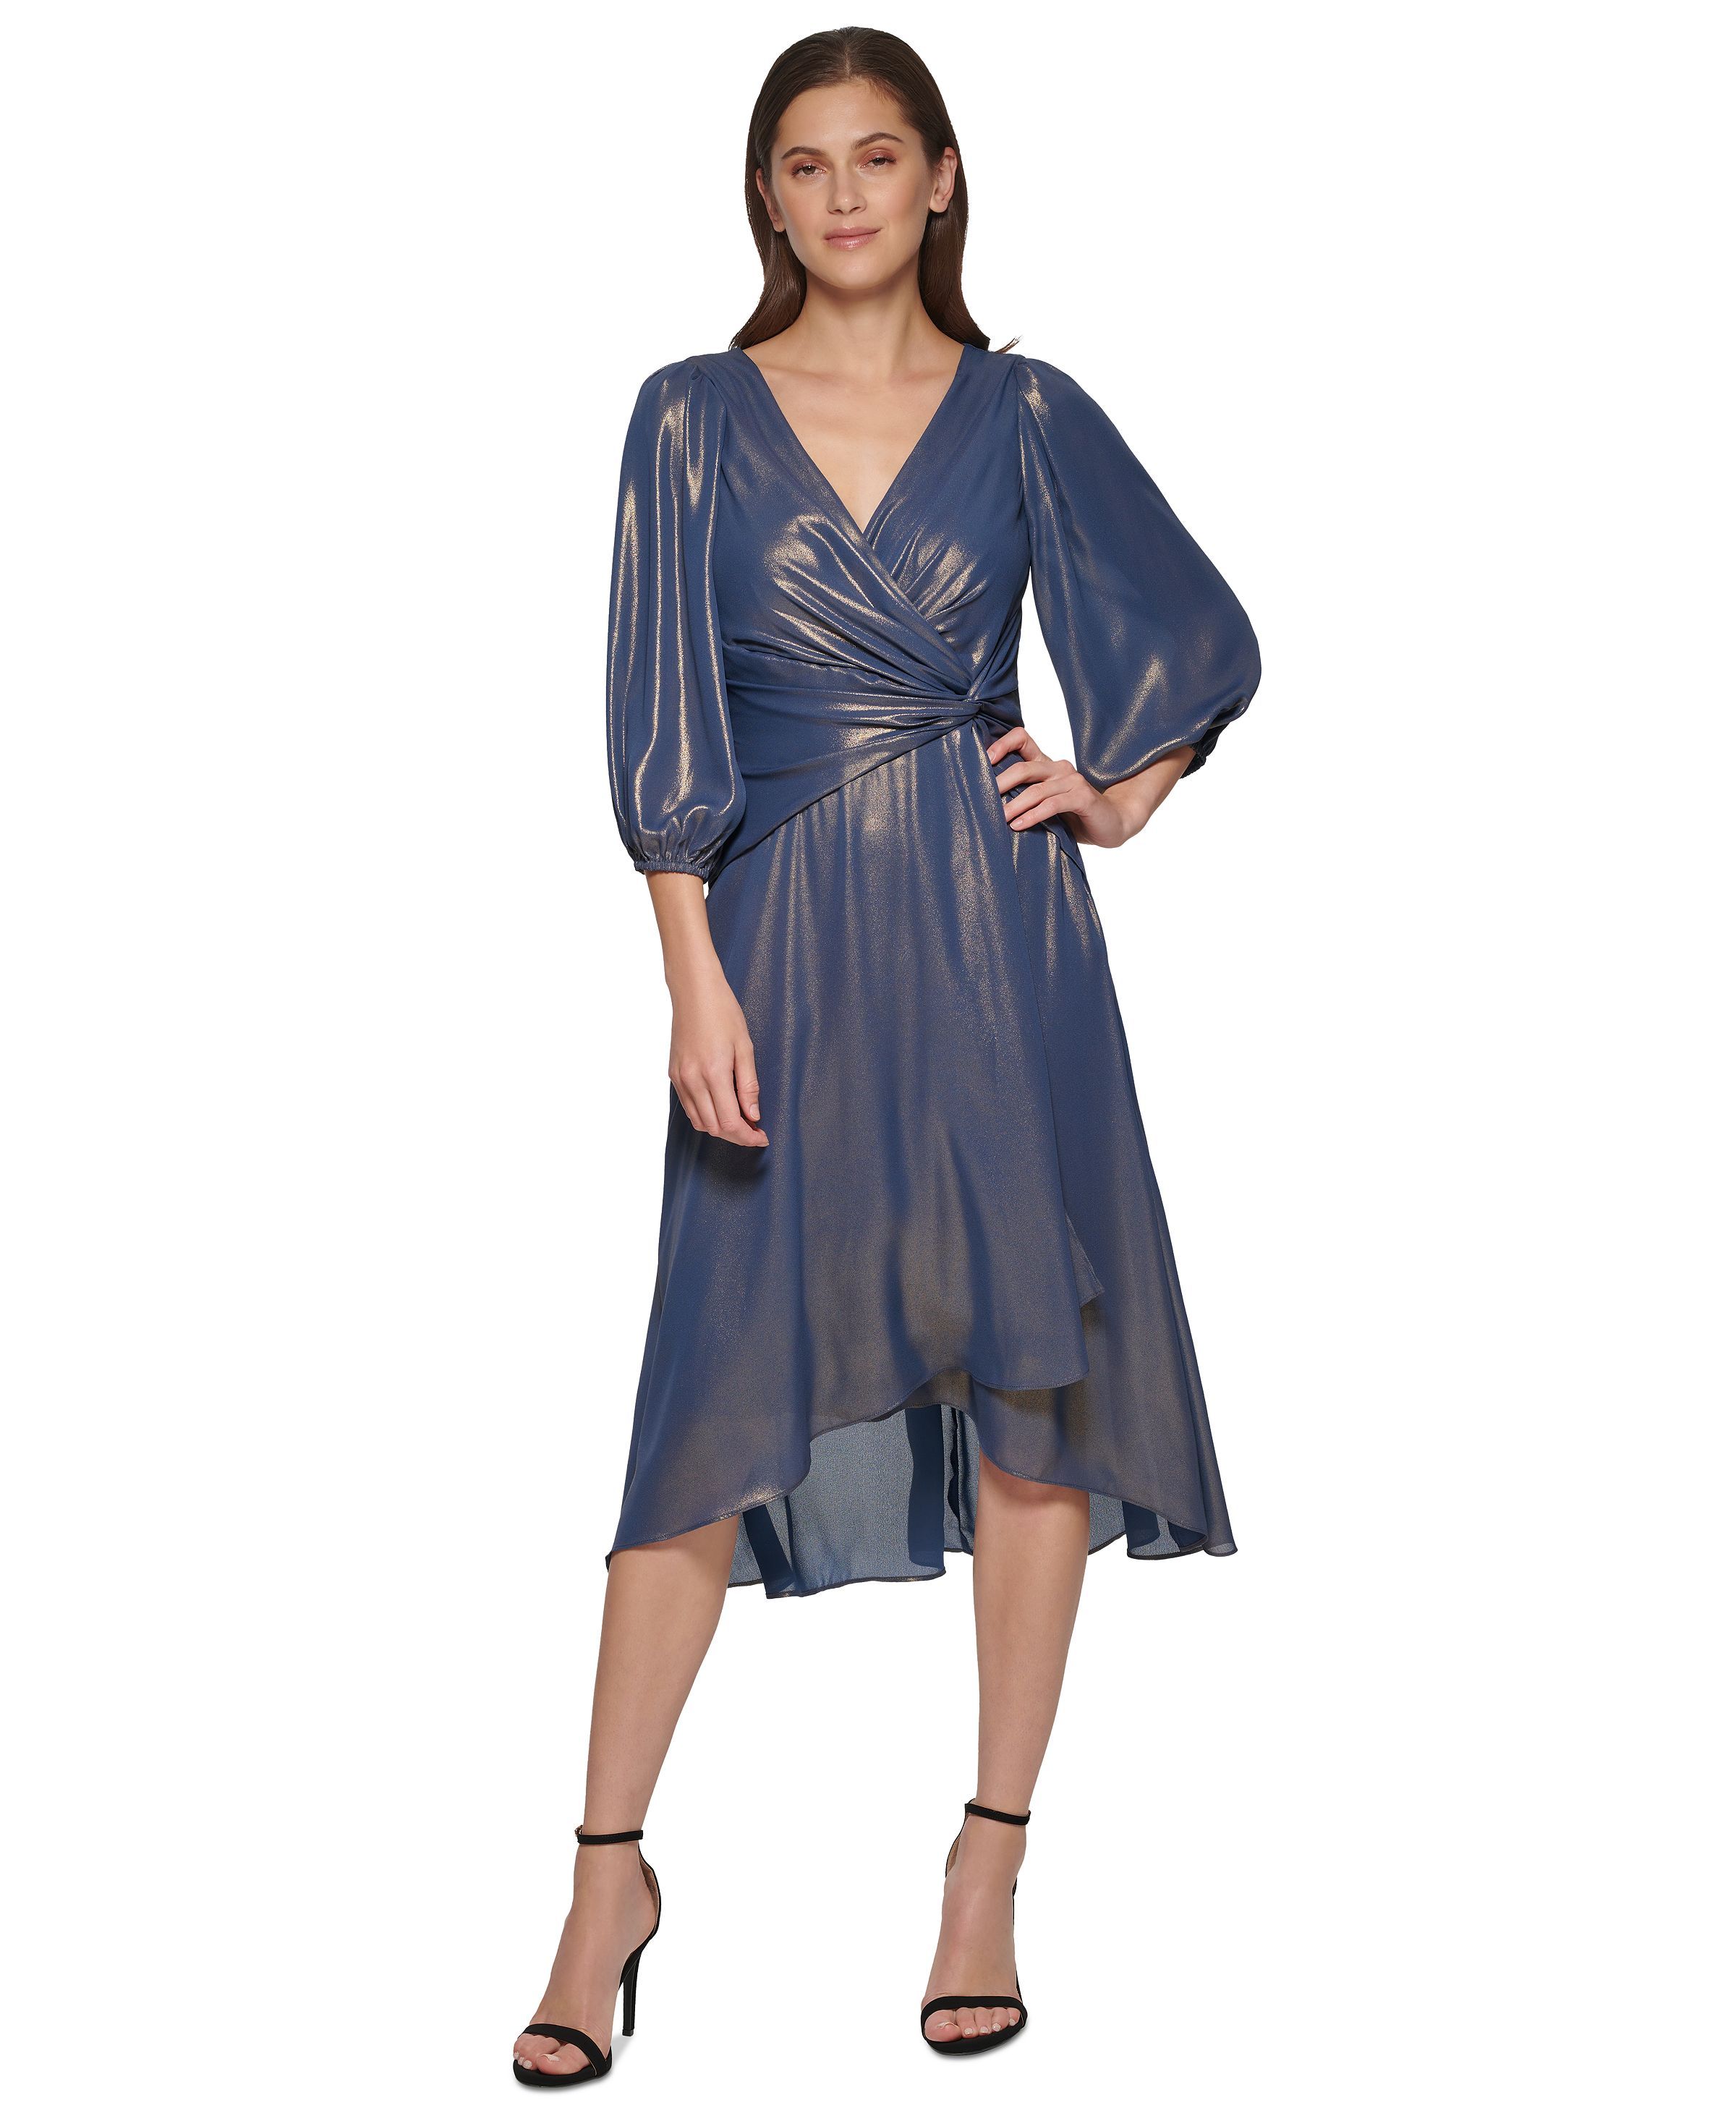 DKNY Women's Dress Sz 16 Iridescent Twisted Balloon-Sleeve Blue